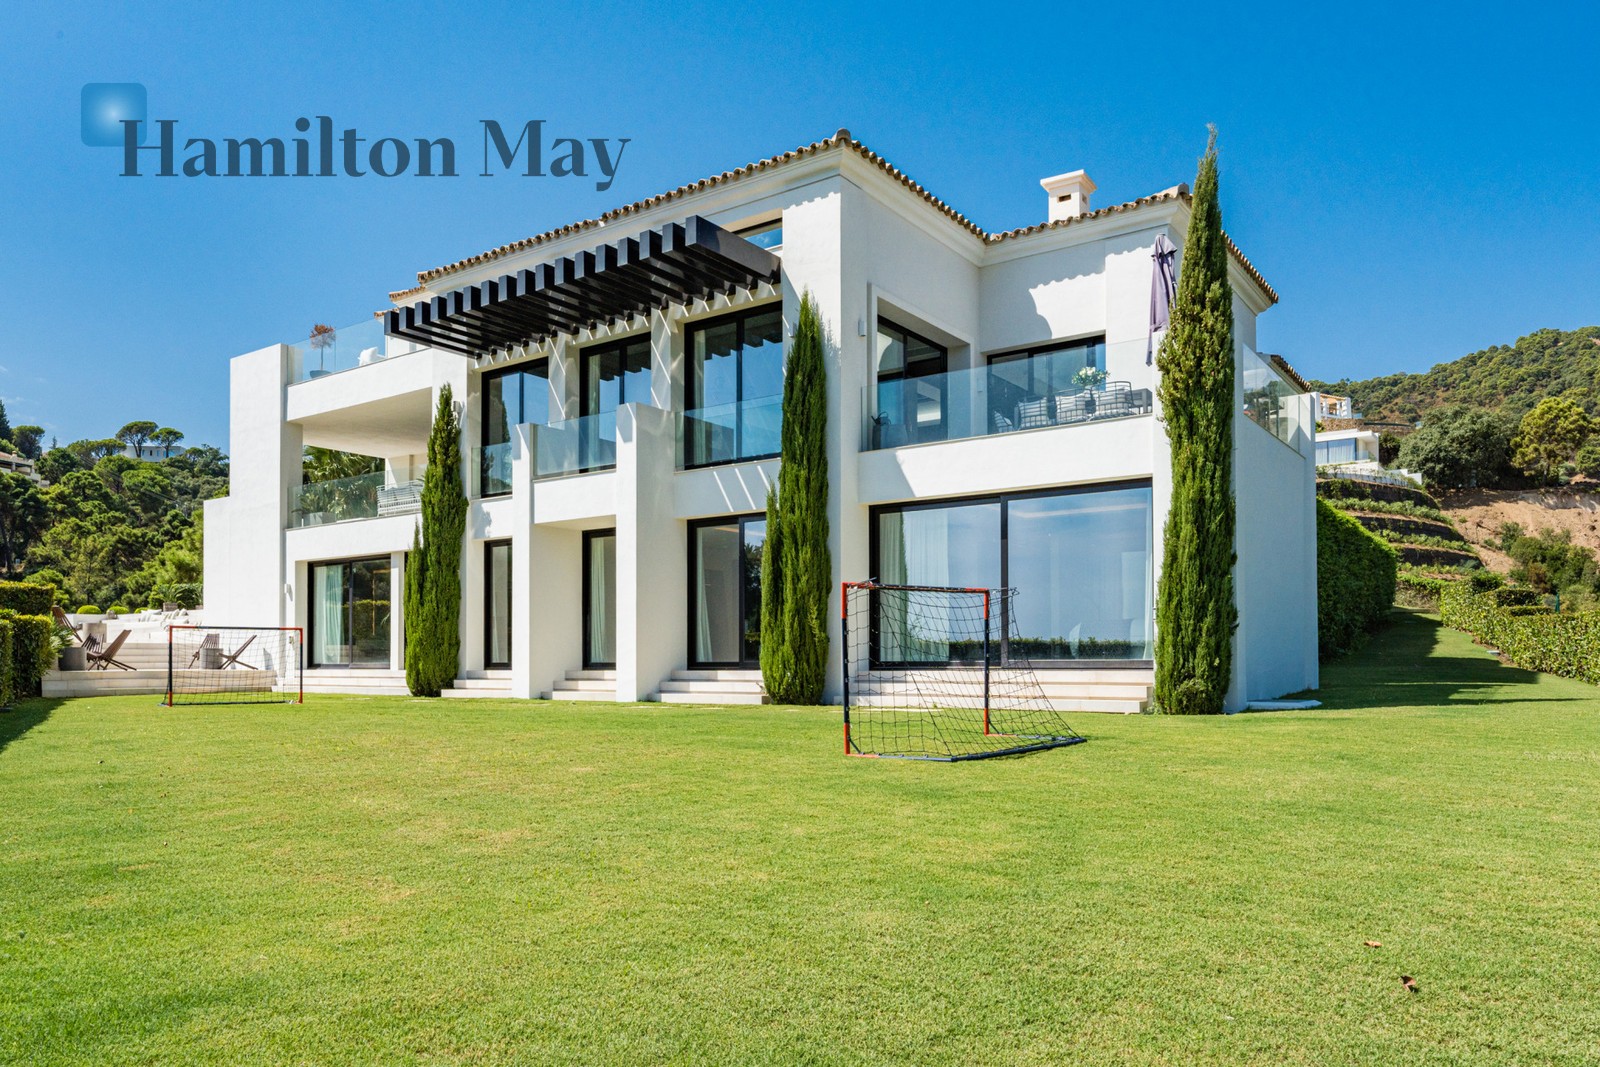 Stunning five bedroom villa located in prestigious El Madroñal, Marbella, with panoramic sea views